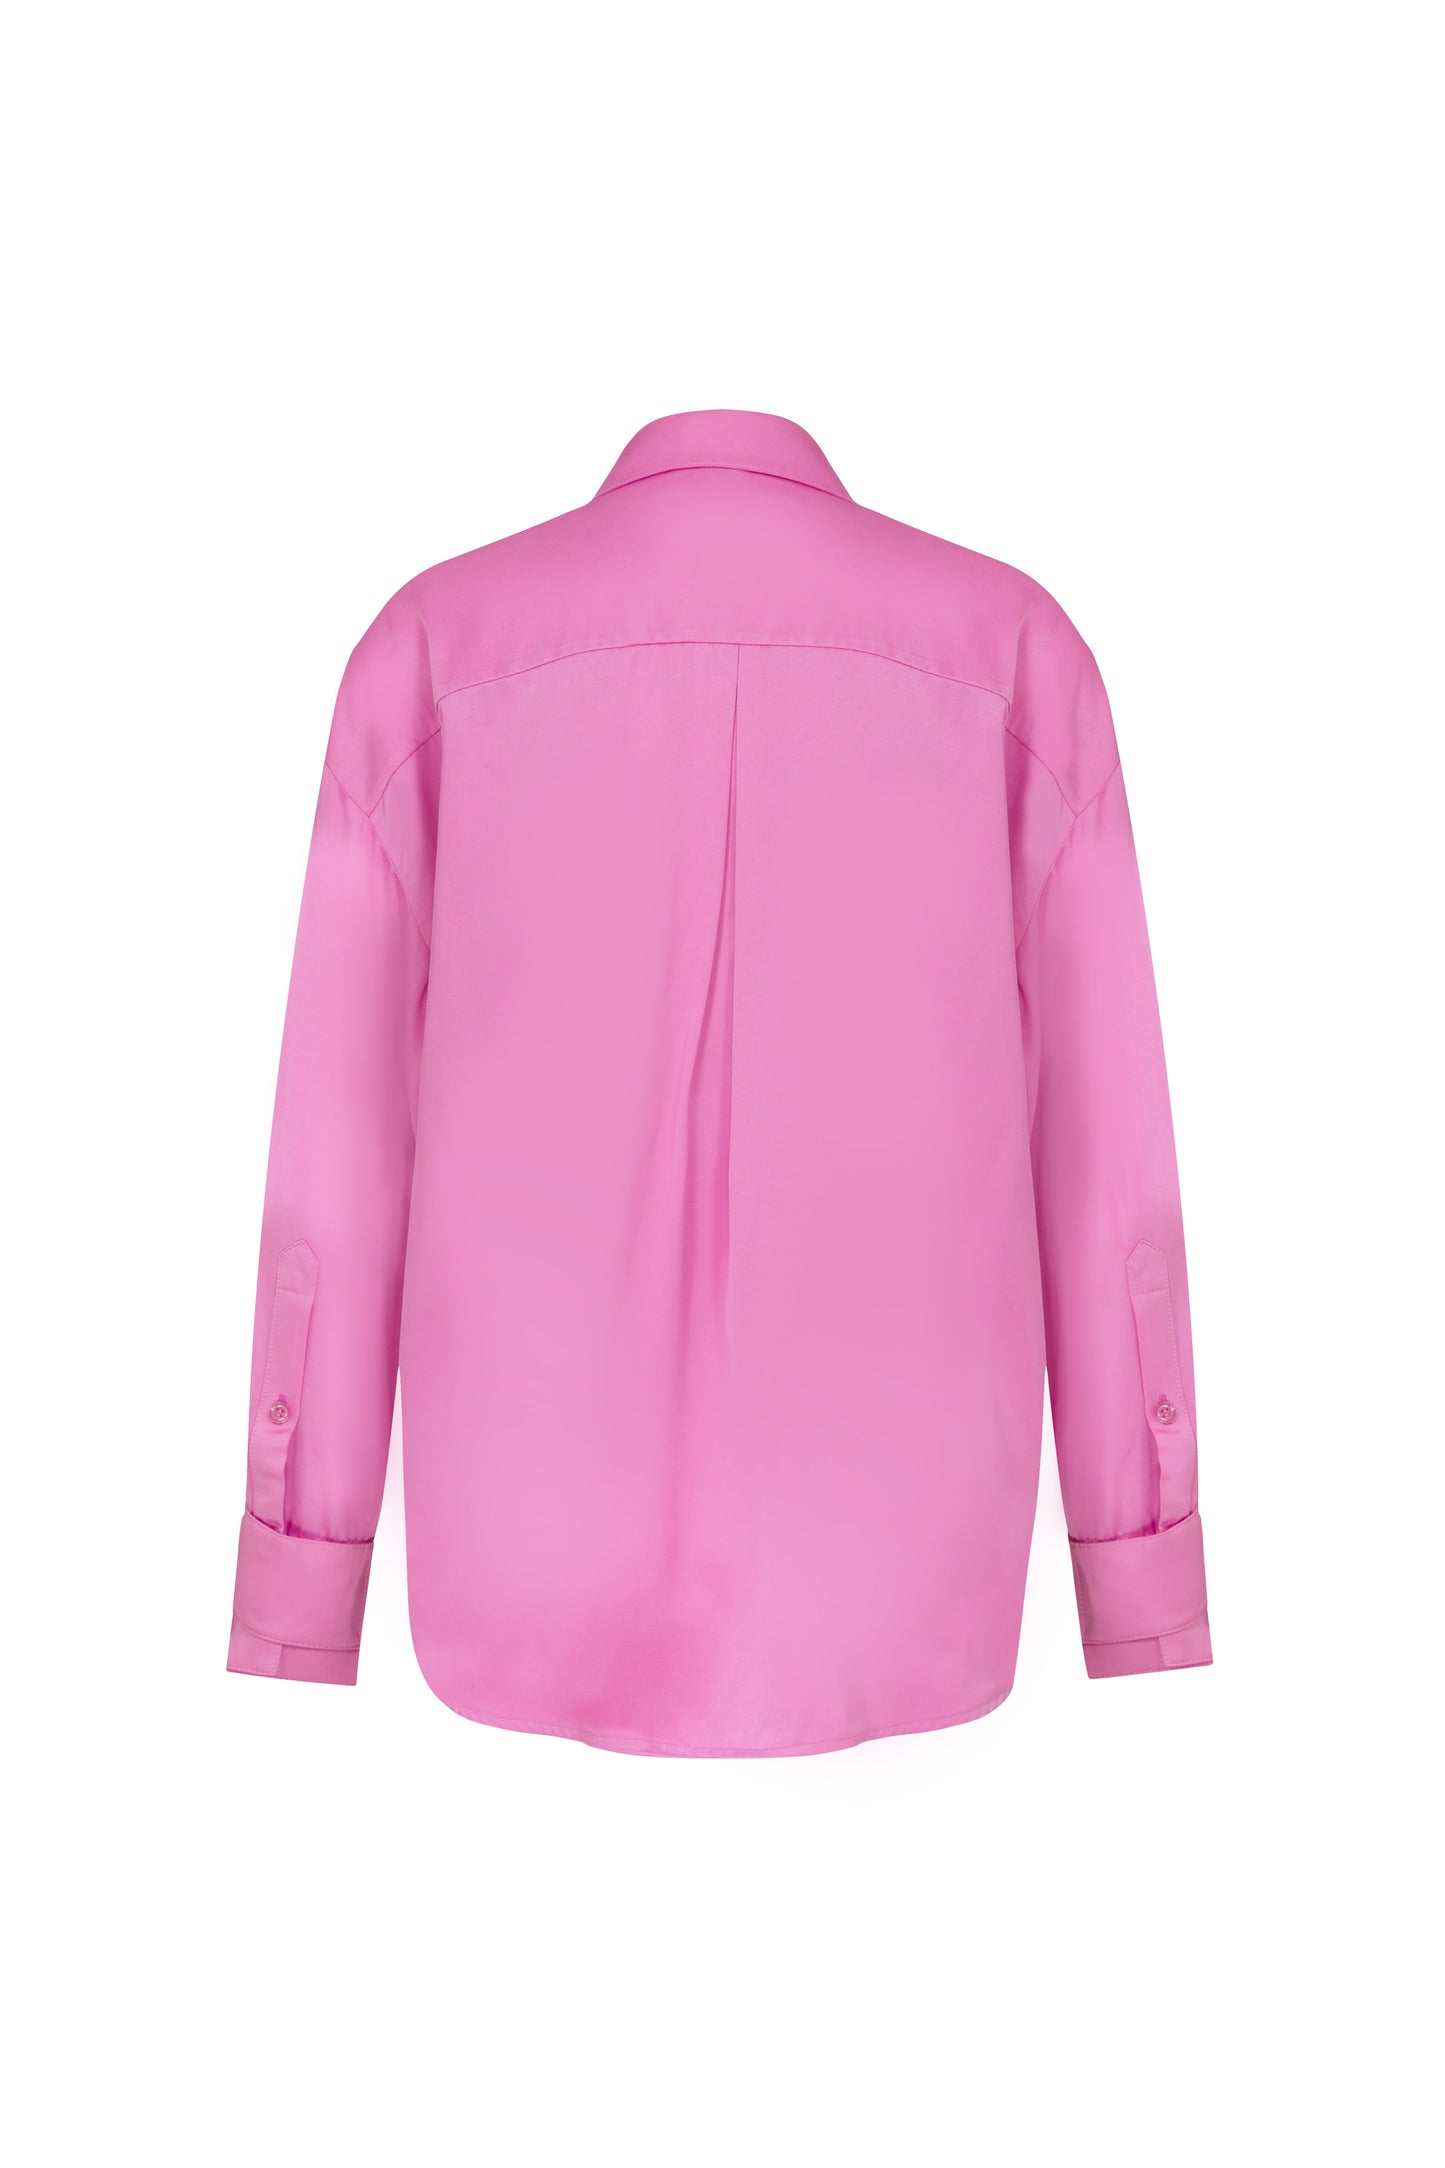 Ravenna Satin Shirt in Partfait Pink